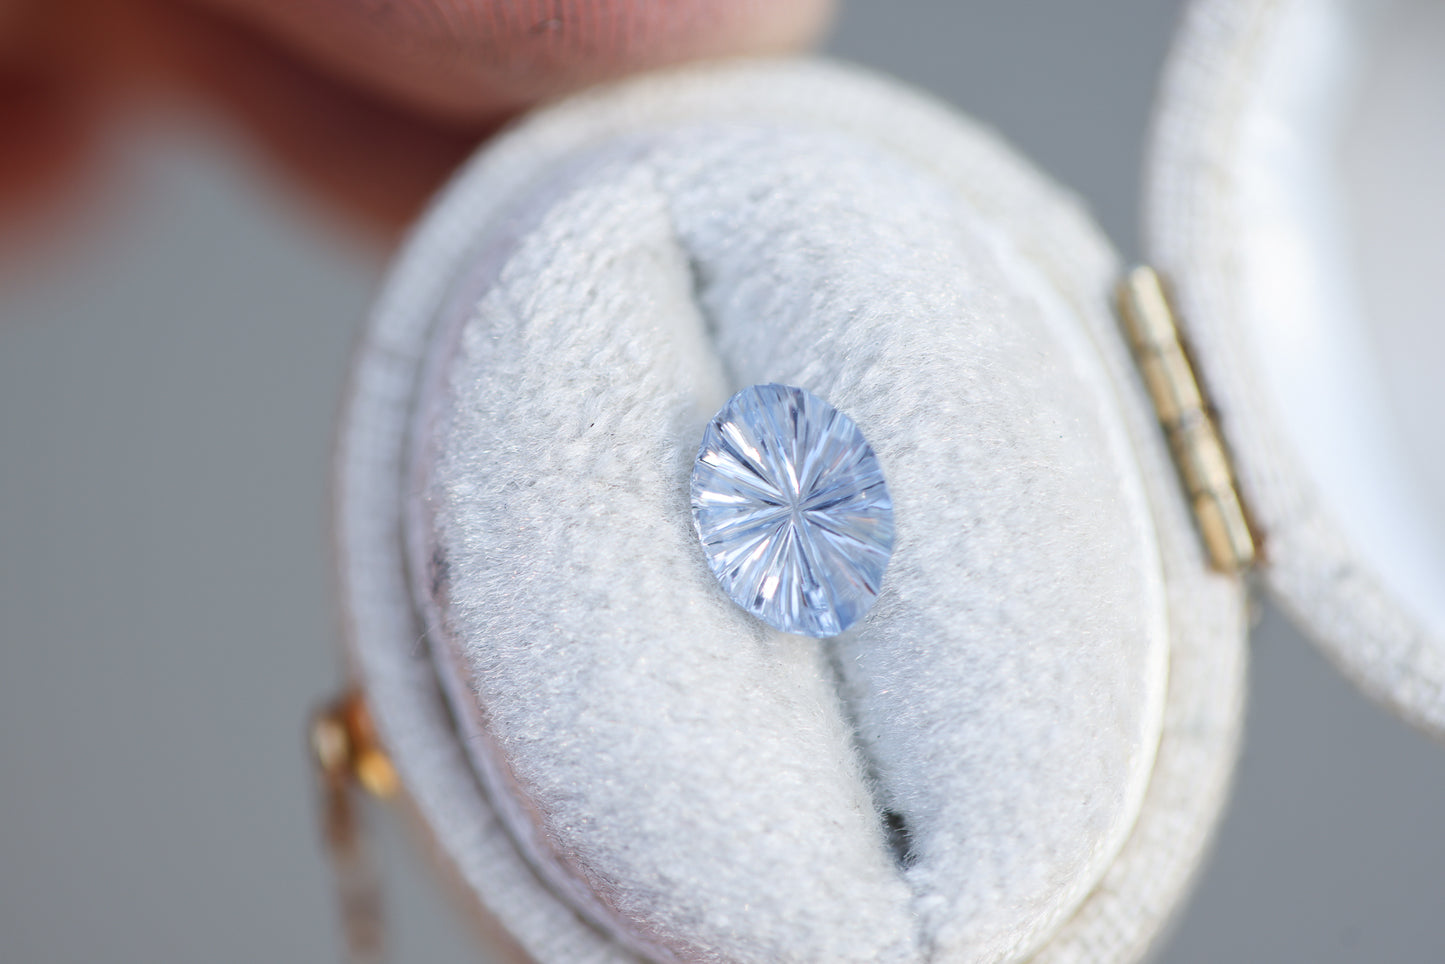 1.18ct oval pale blue sapphire - Starbrite cut by John Dyer